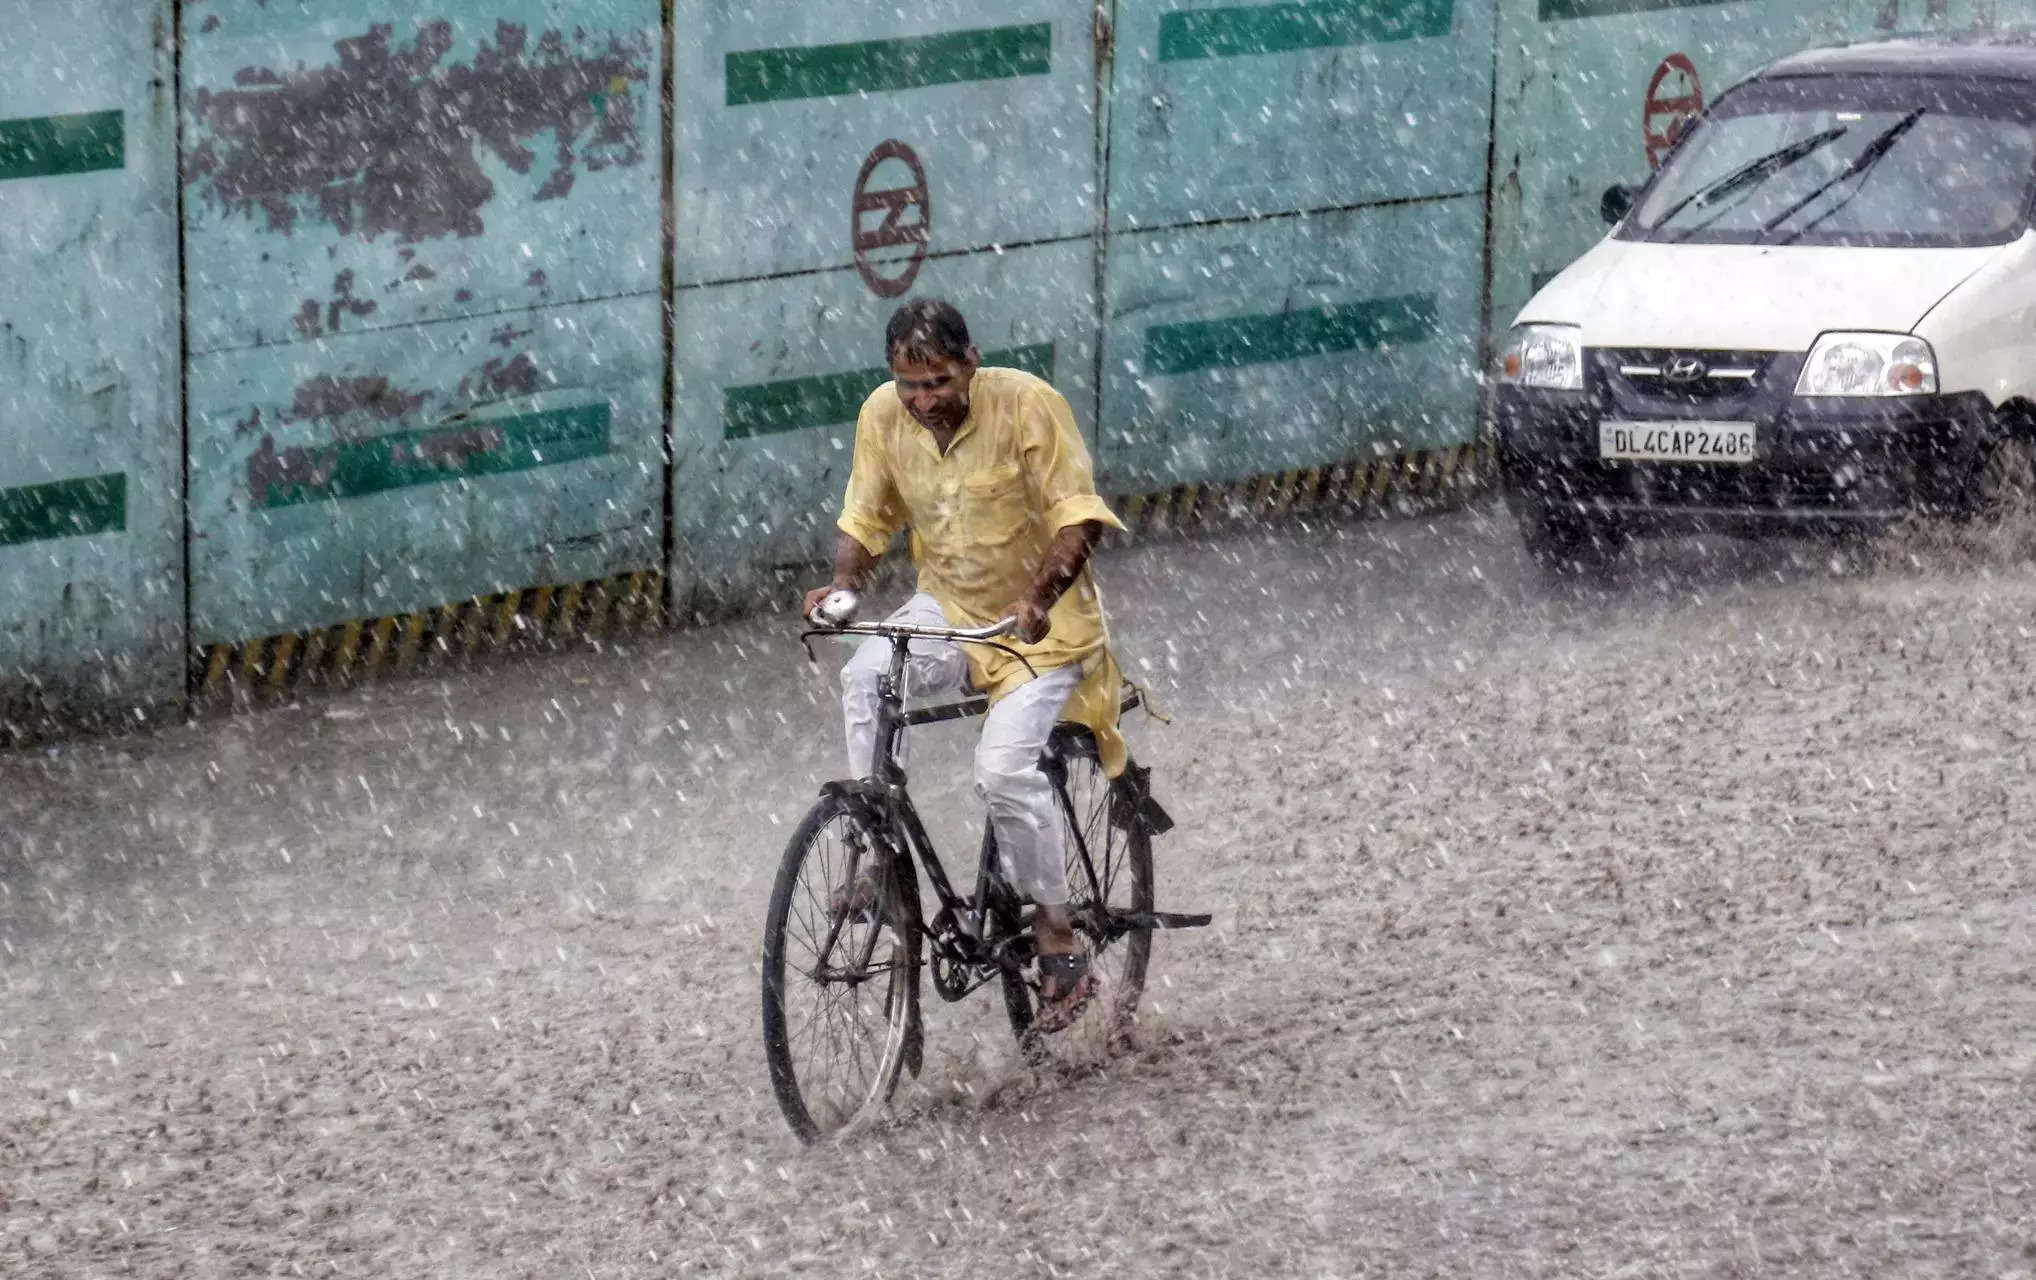 India sees normal rainfall despite El Nino conditions